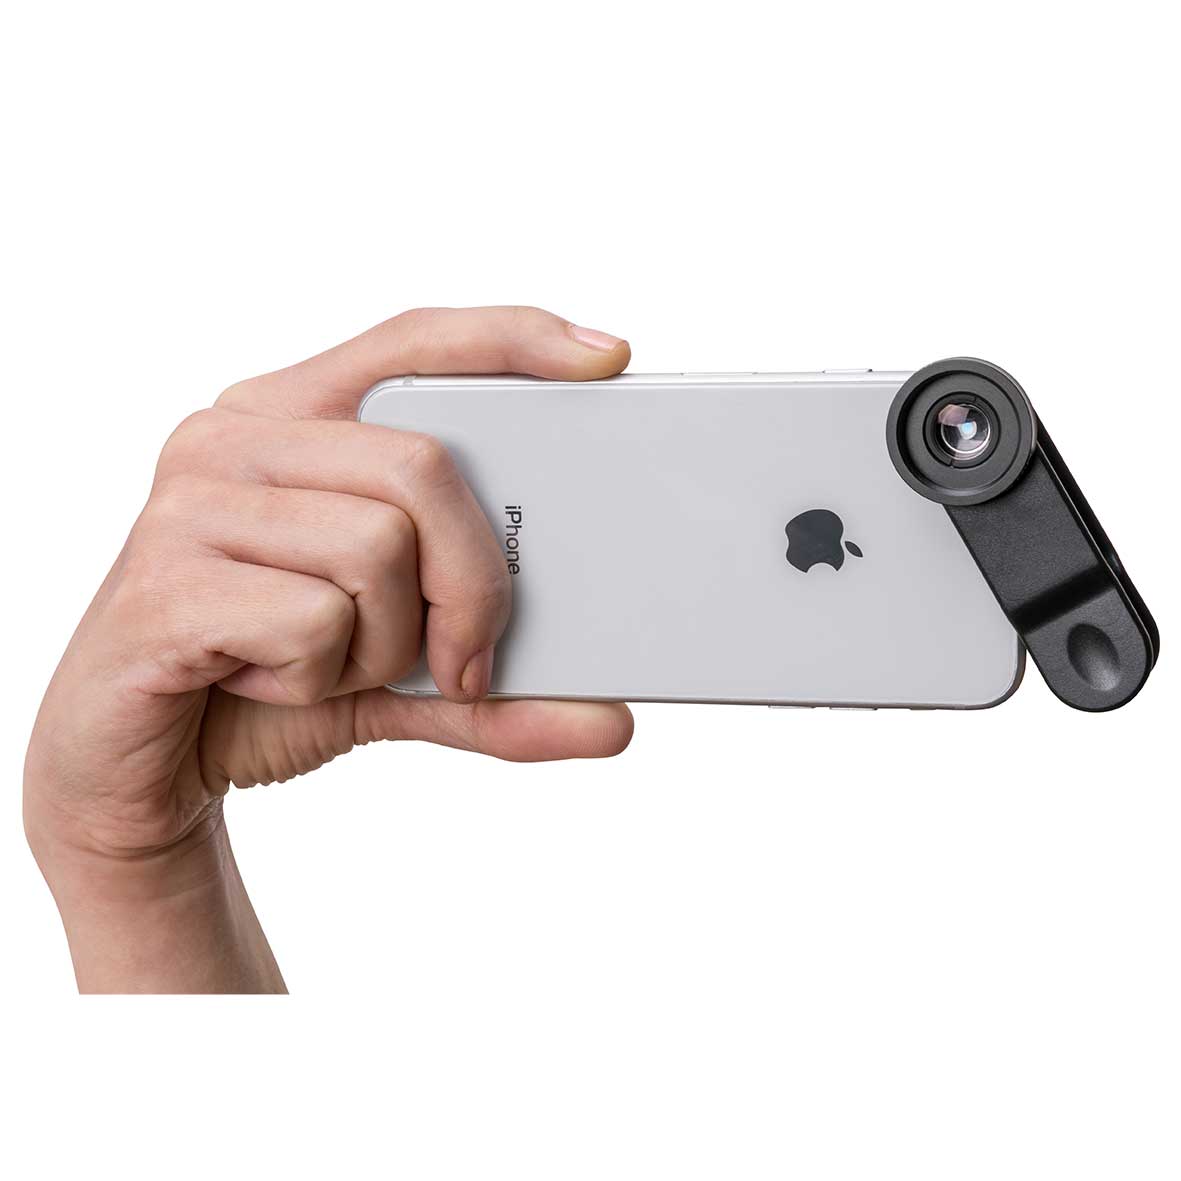 Pictar Smart Grip + Smart Lens Wide & Macro